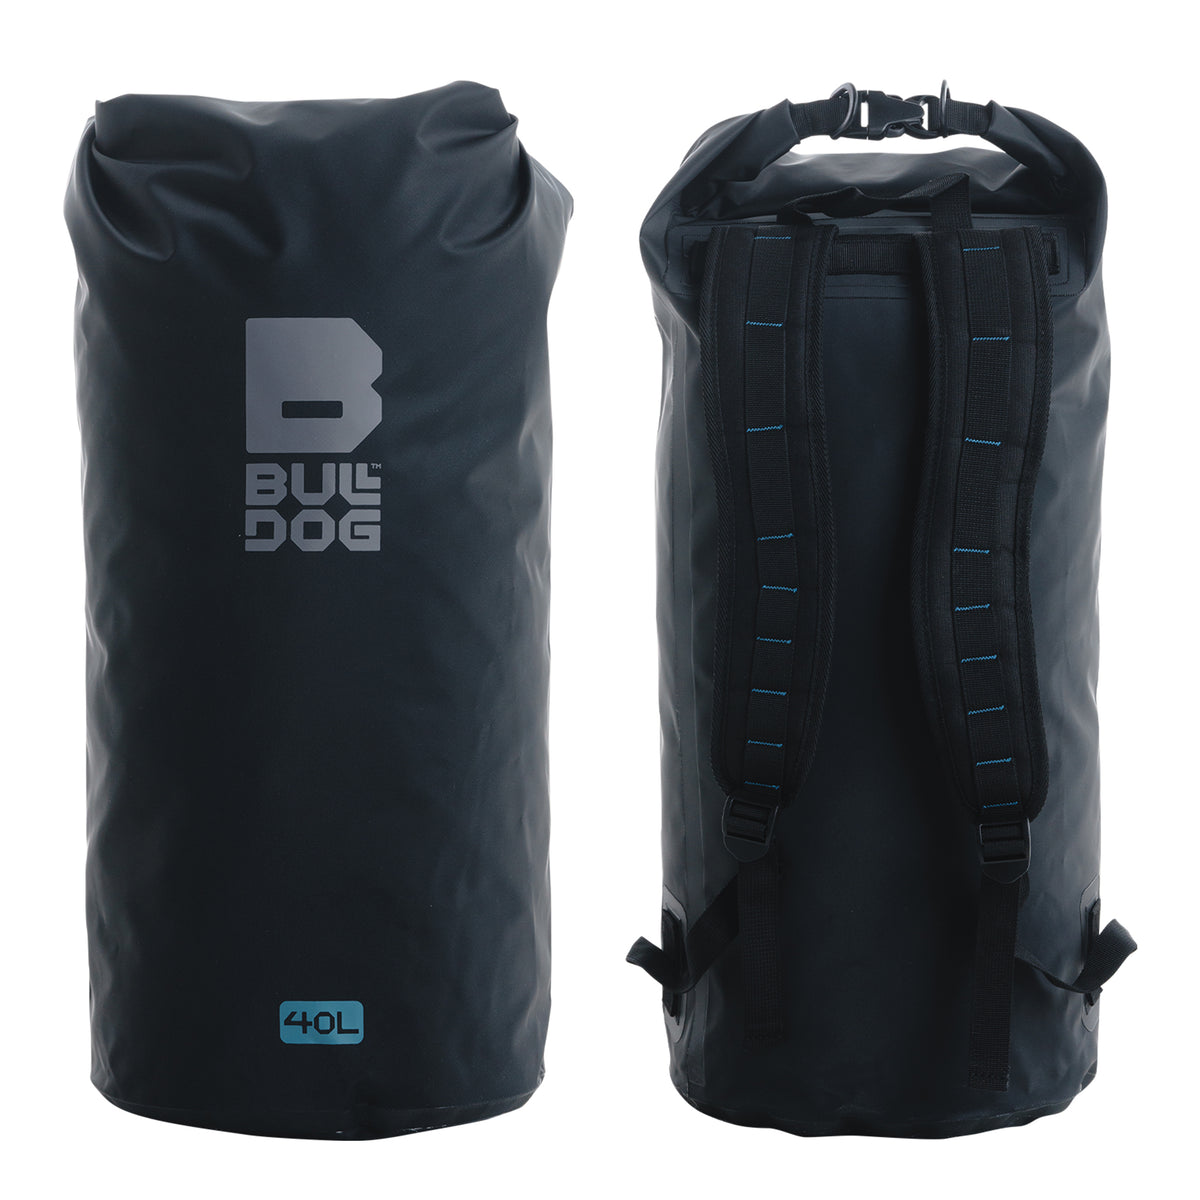 Bulldog Dry Back Pack 40L